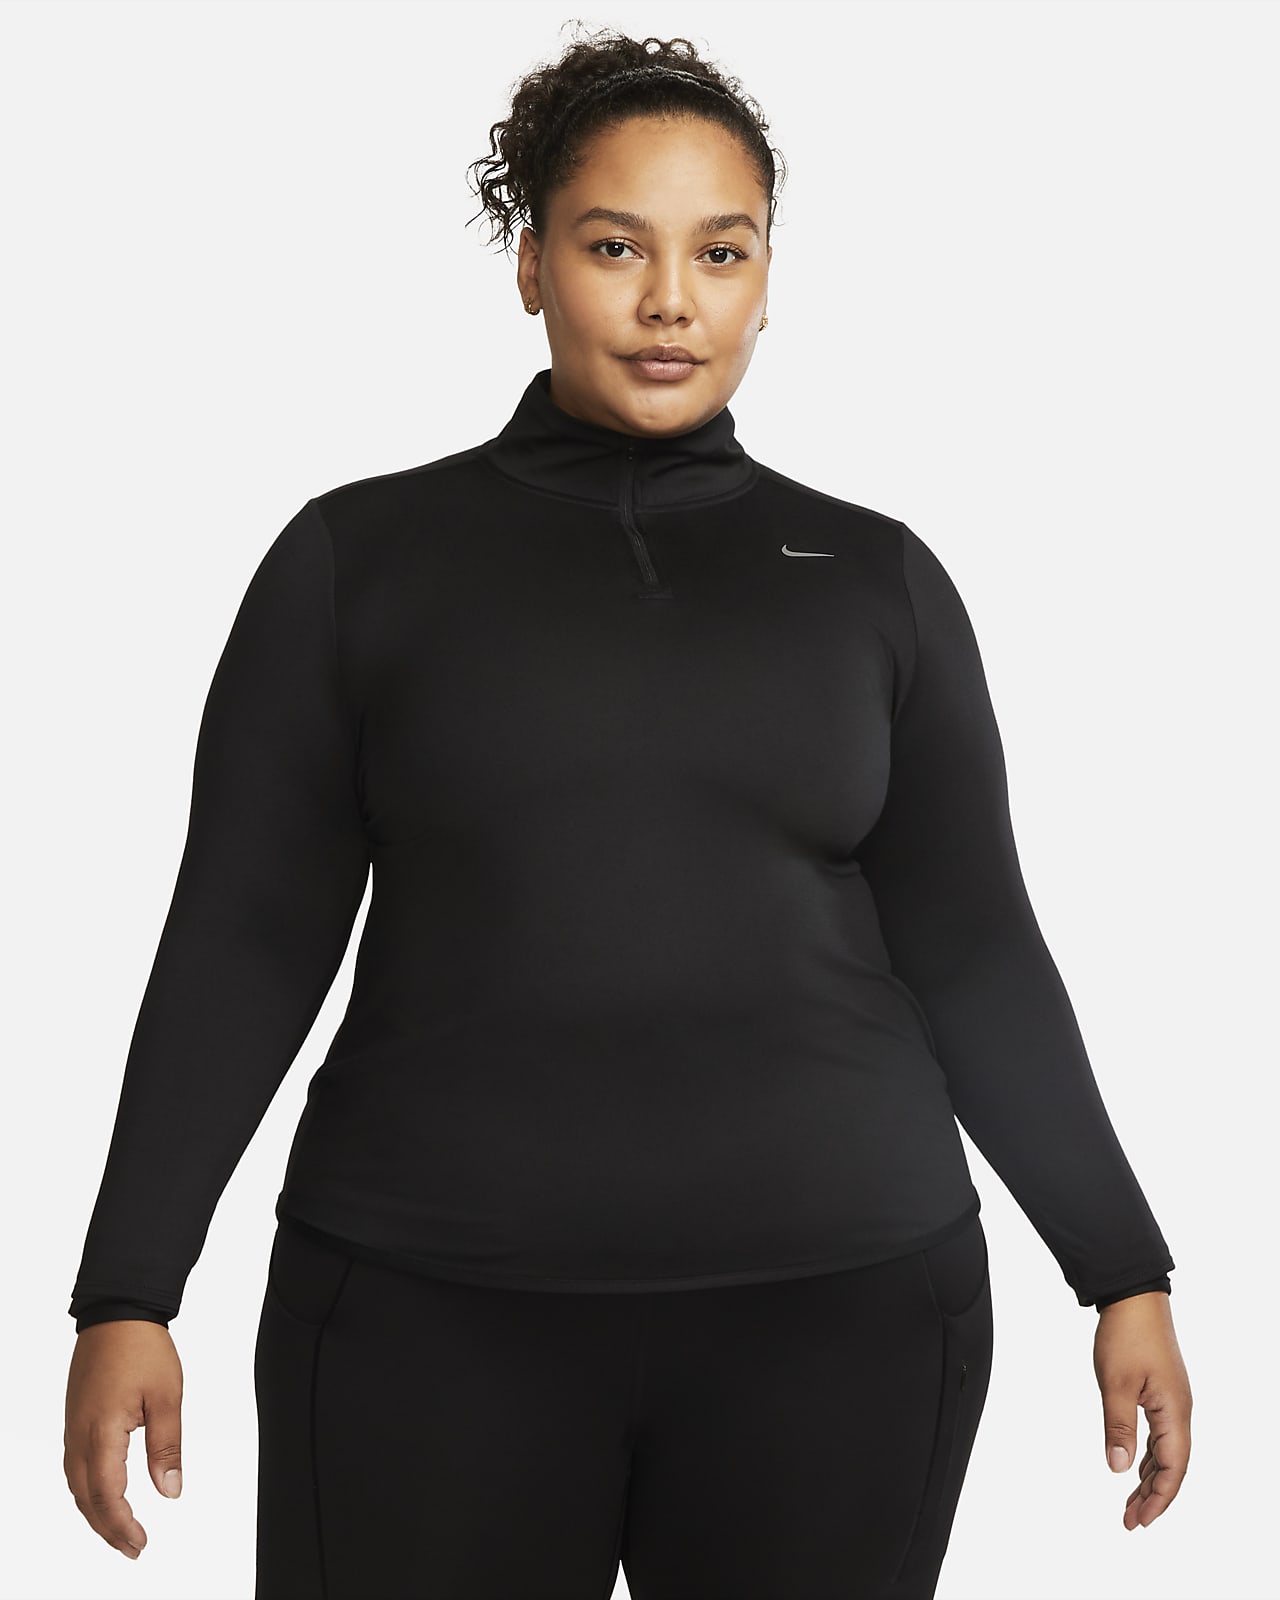 Nike Swift UV 1/4-Zip Running Top (Plus Size). Nike DK